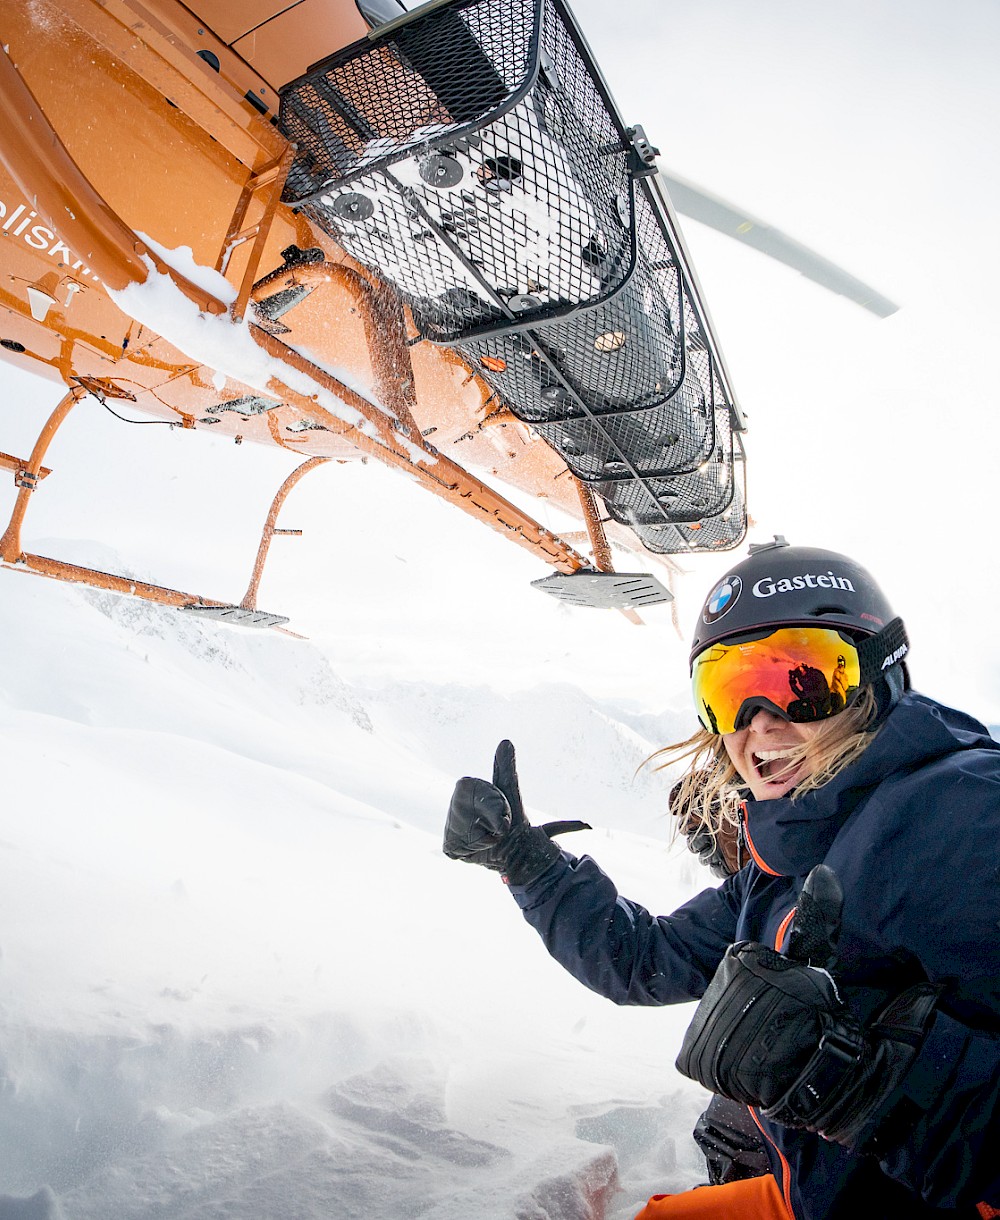 Heli ski drop off with Sandra Lahnsteiner at Stellar Heliskiing